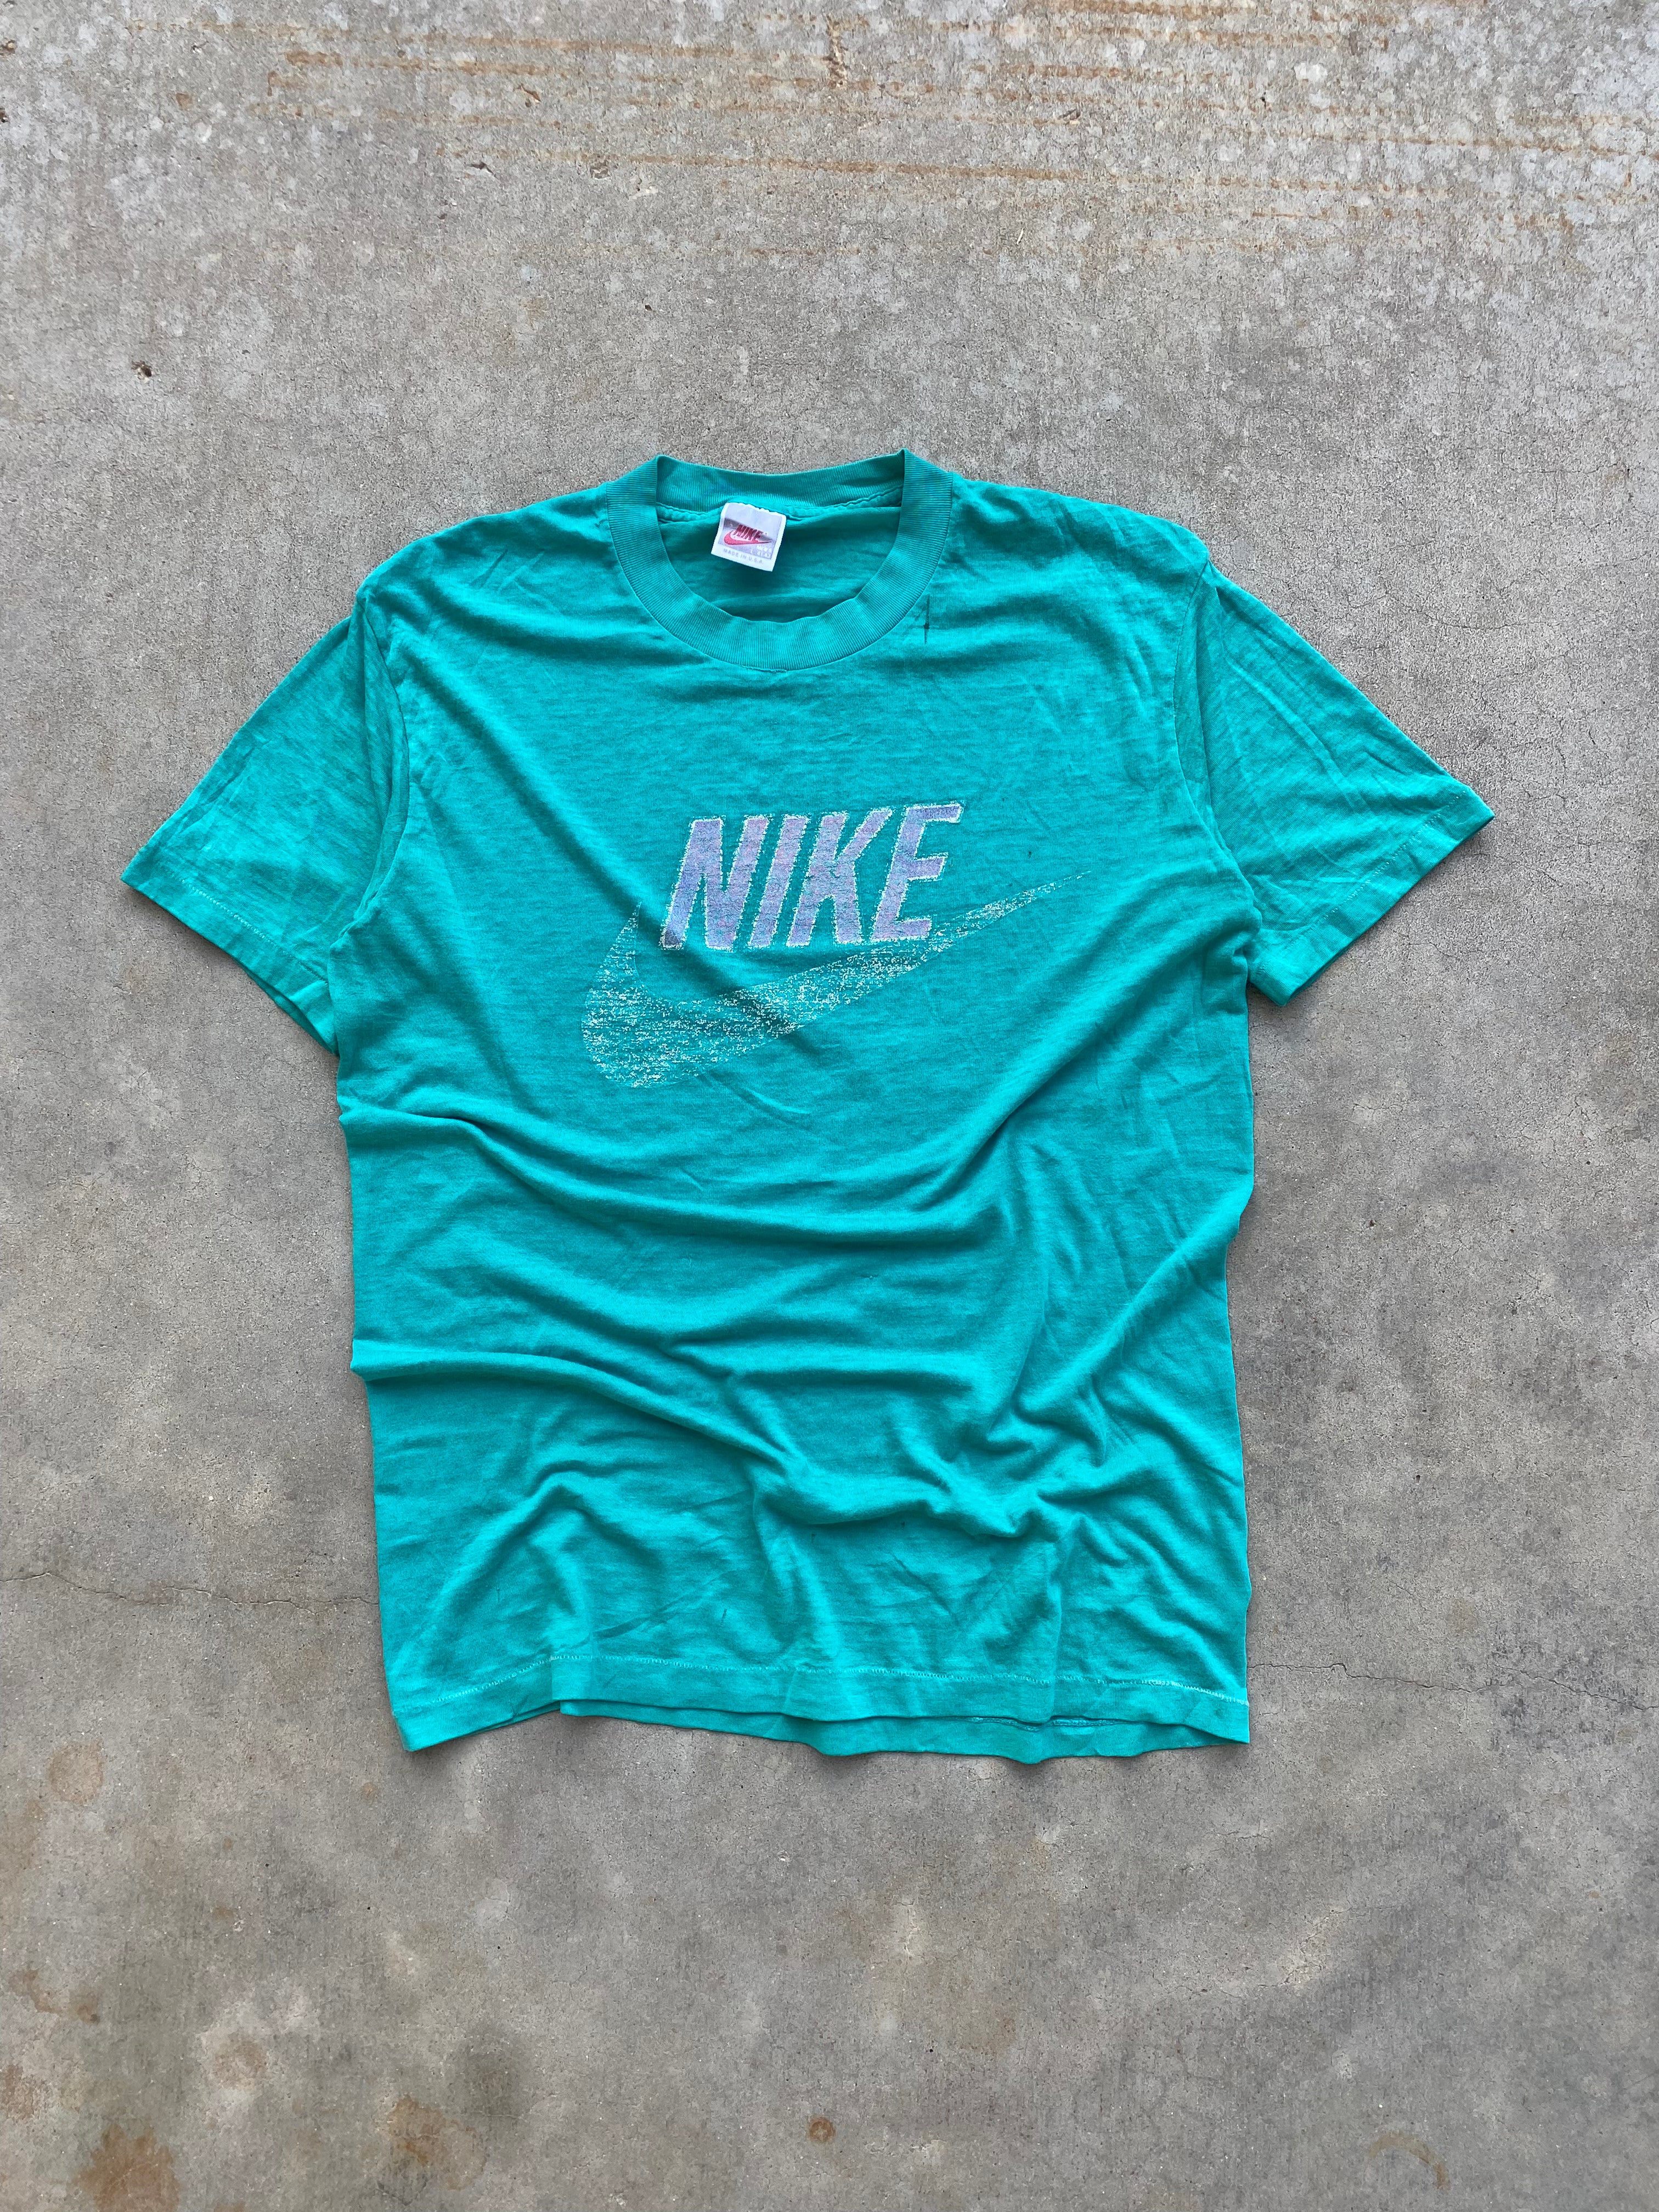 1980s Faded/Thin Nike T-Shirt (M)